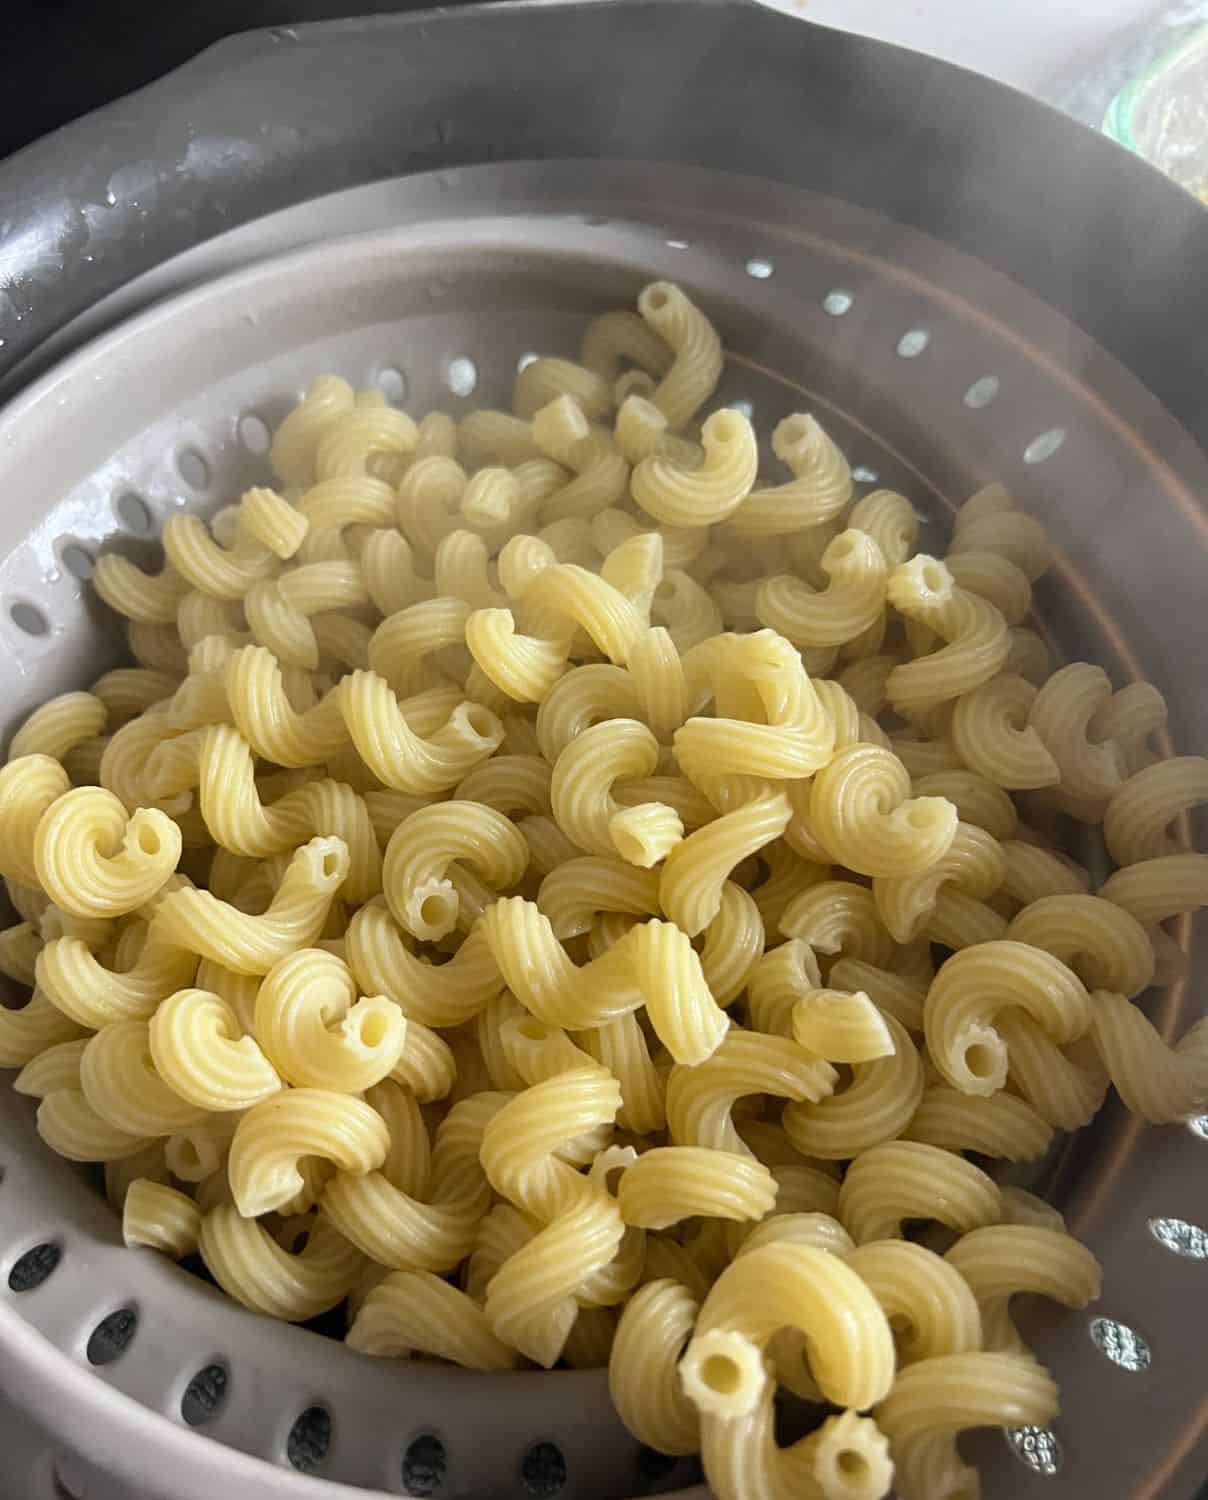 Boiled cavatappi pasta in strainer. 